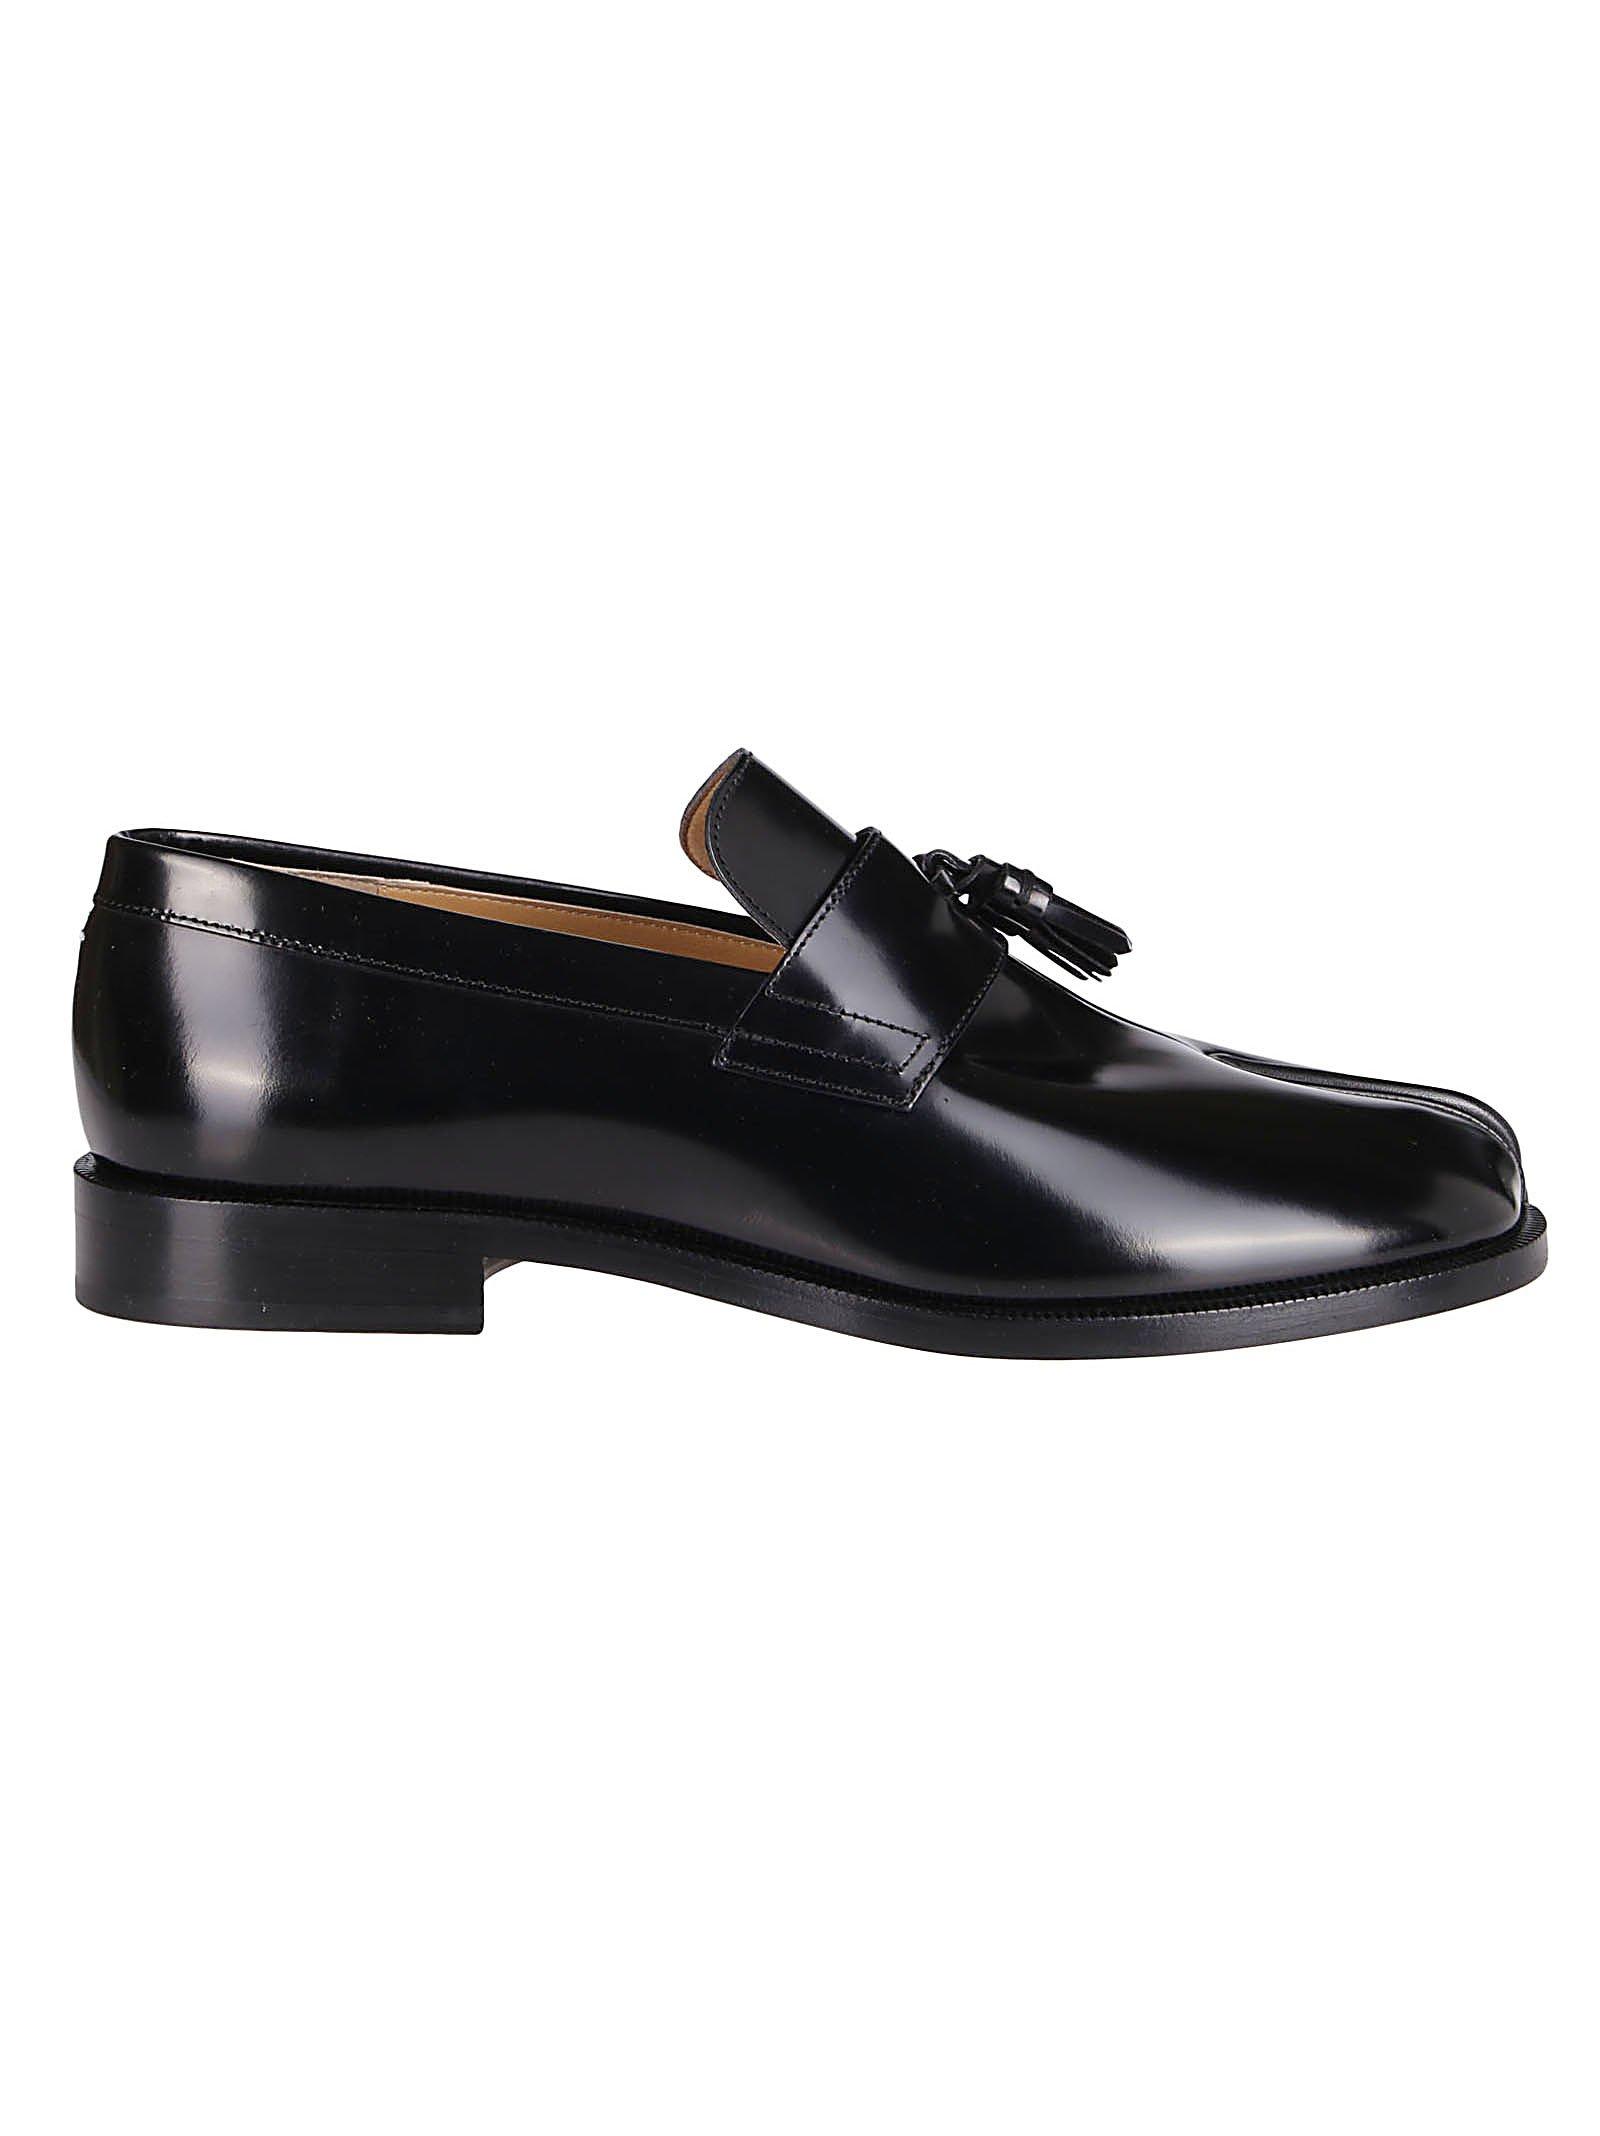 Maison Margiela Tabi Tassel Loafers in Black for Men | Lyst